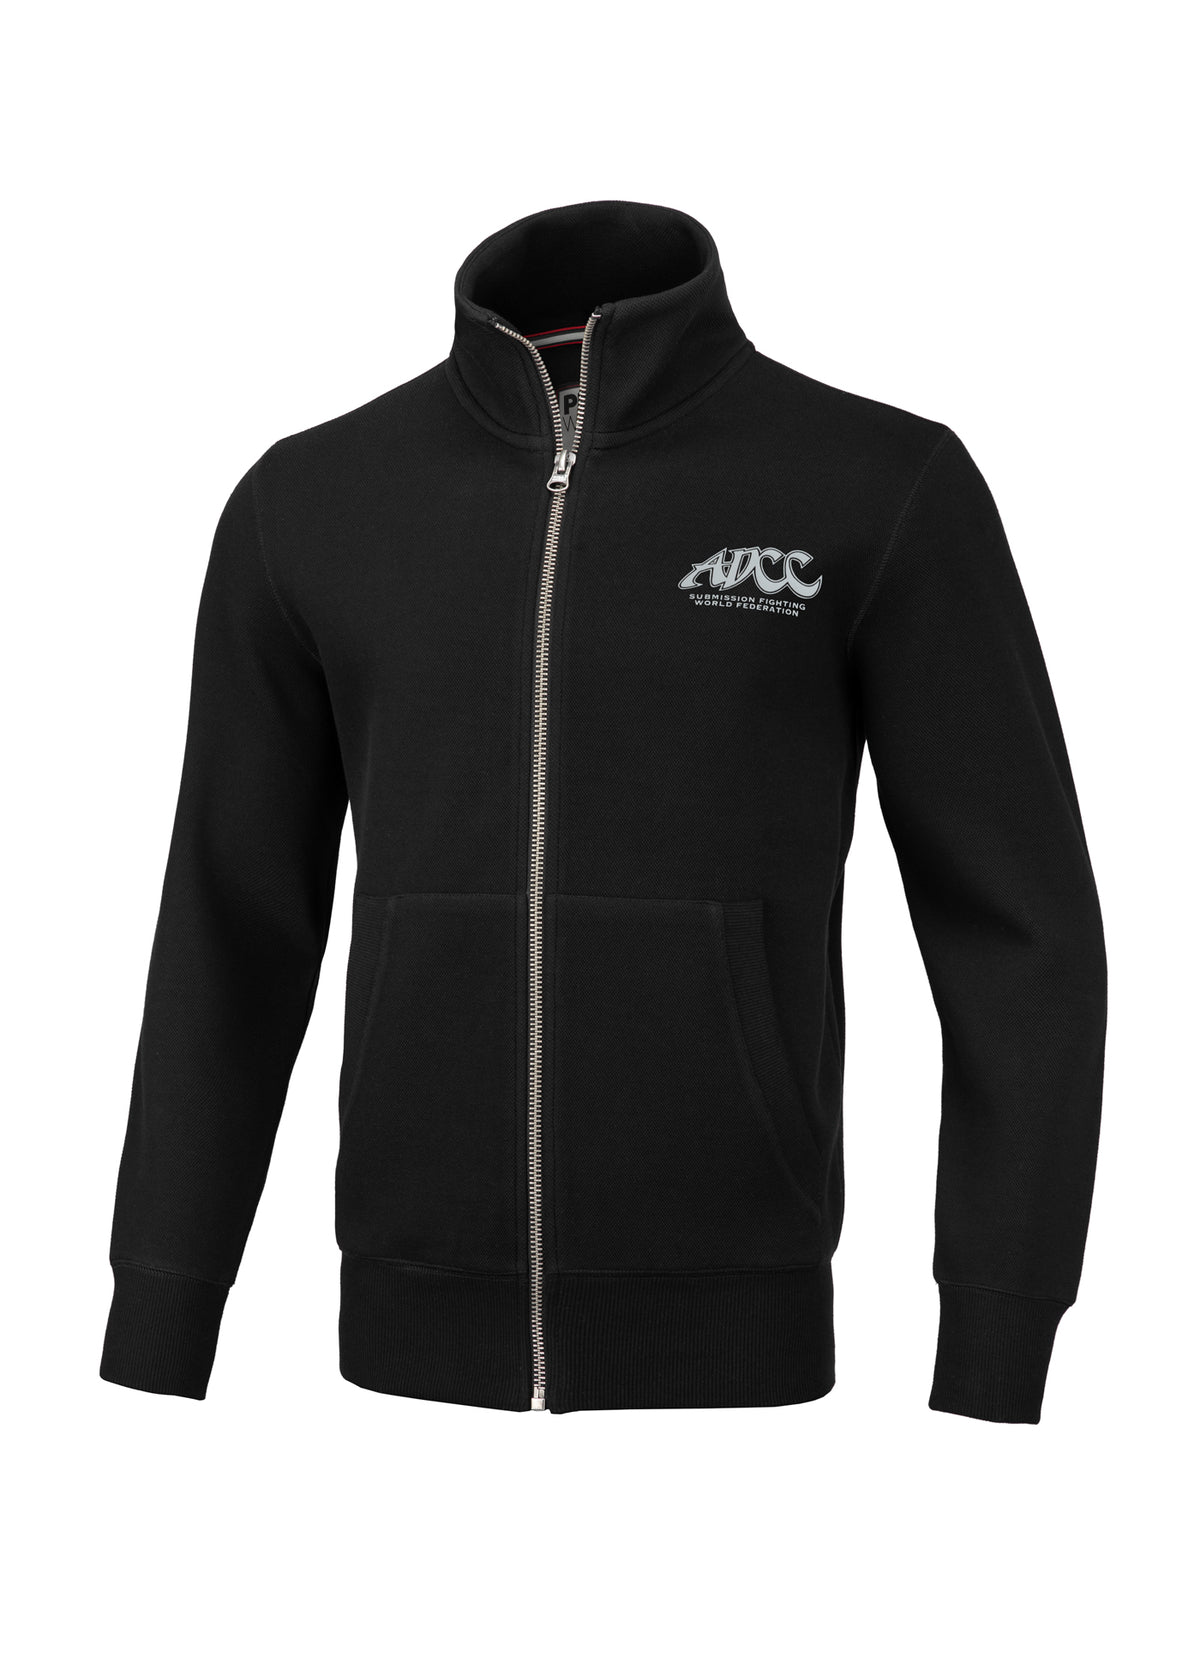 Sweatjacket Premium Pique ADCC Black - Pitbull West Coast International Store 